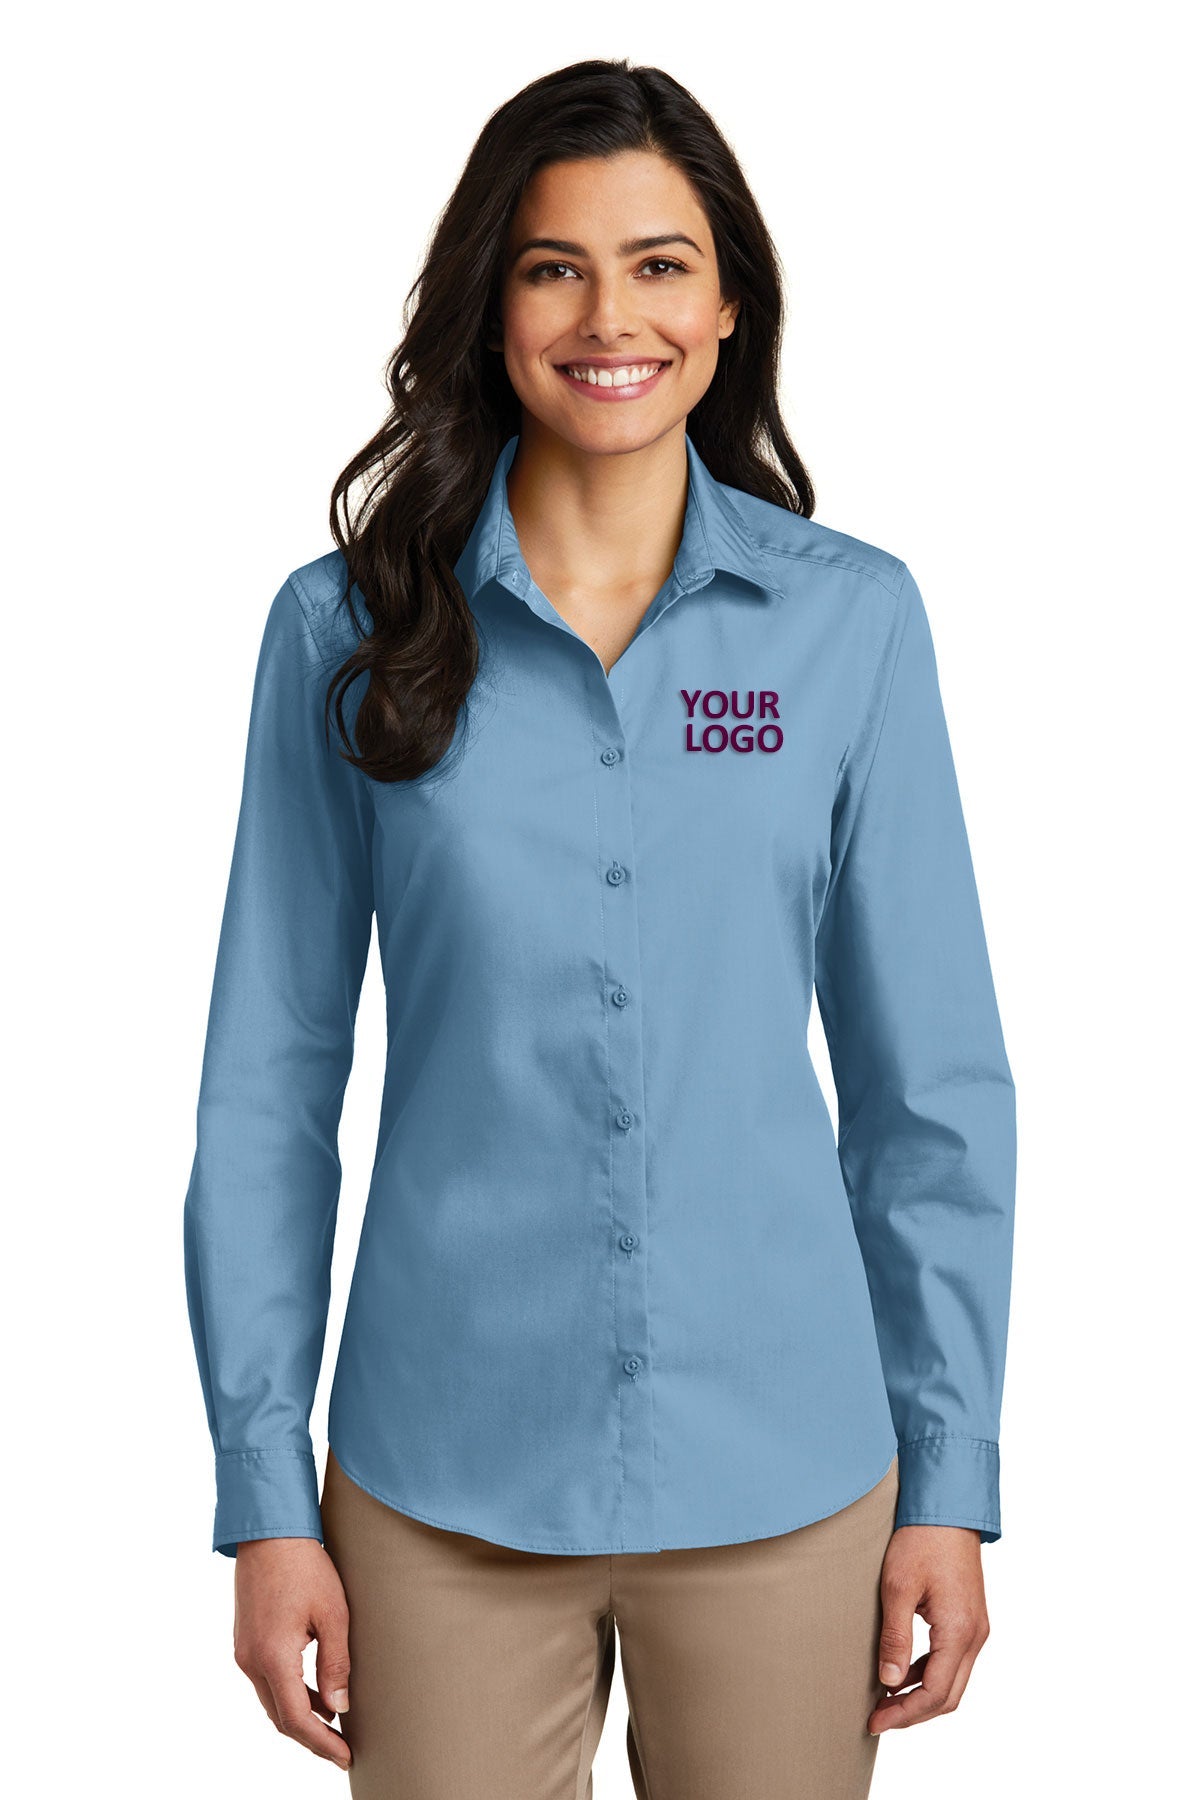 Port Authority Carolina Blue LW100 company logo shirts